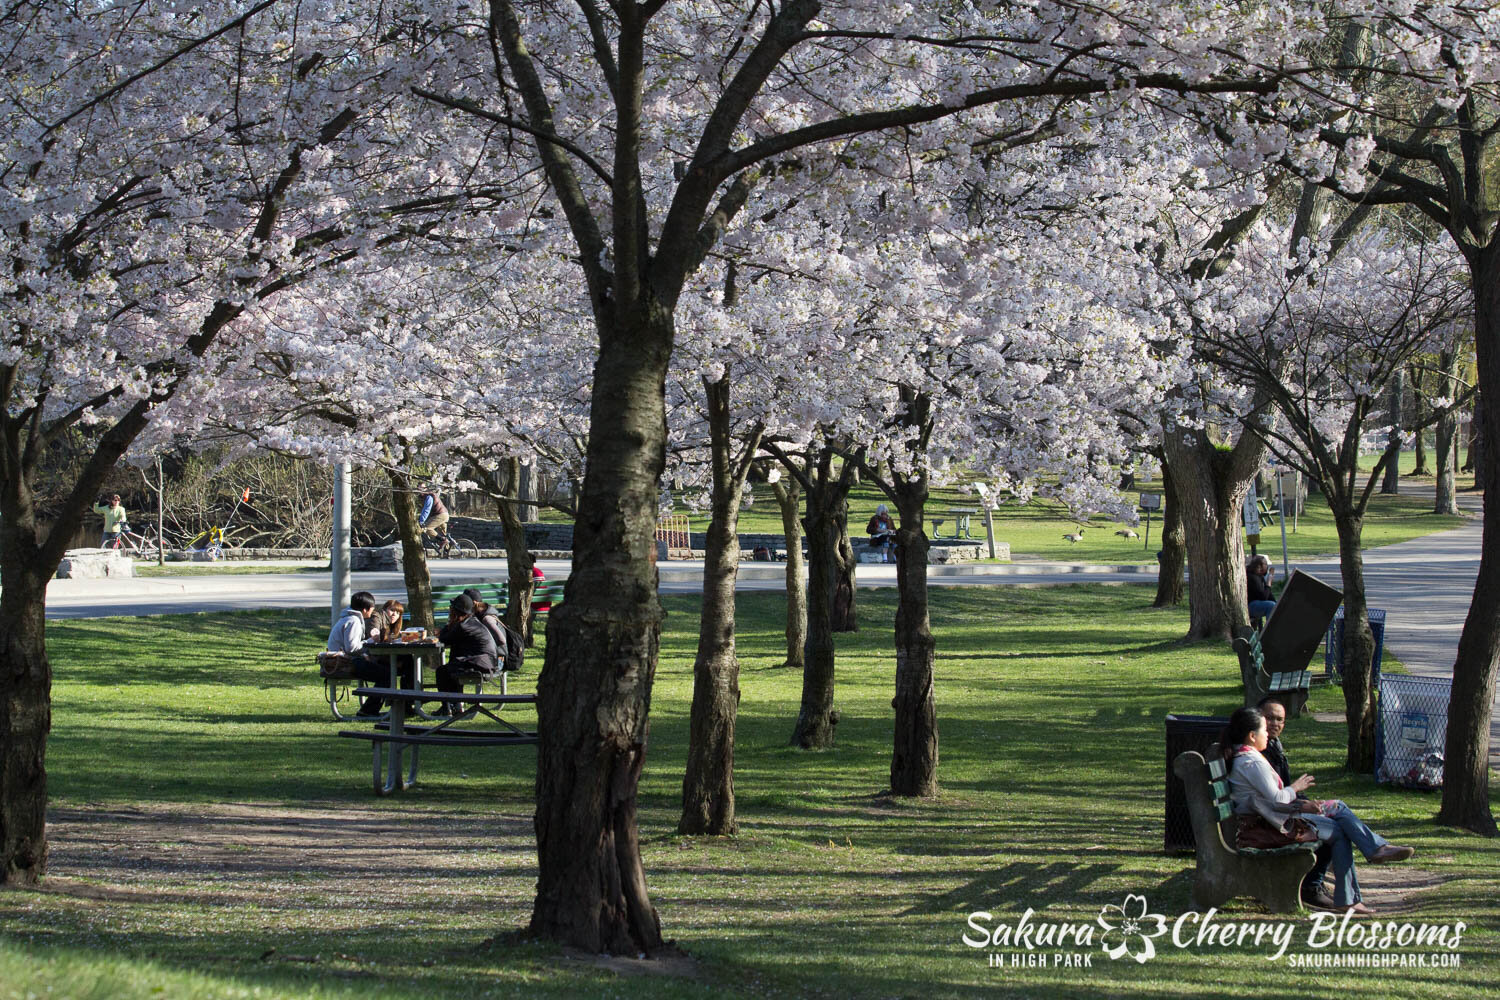  Sakura // Cherry Blossoms in High Park - April 18, 2012 - www.SakurainHighPark.com 